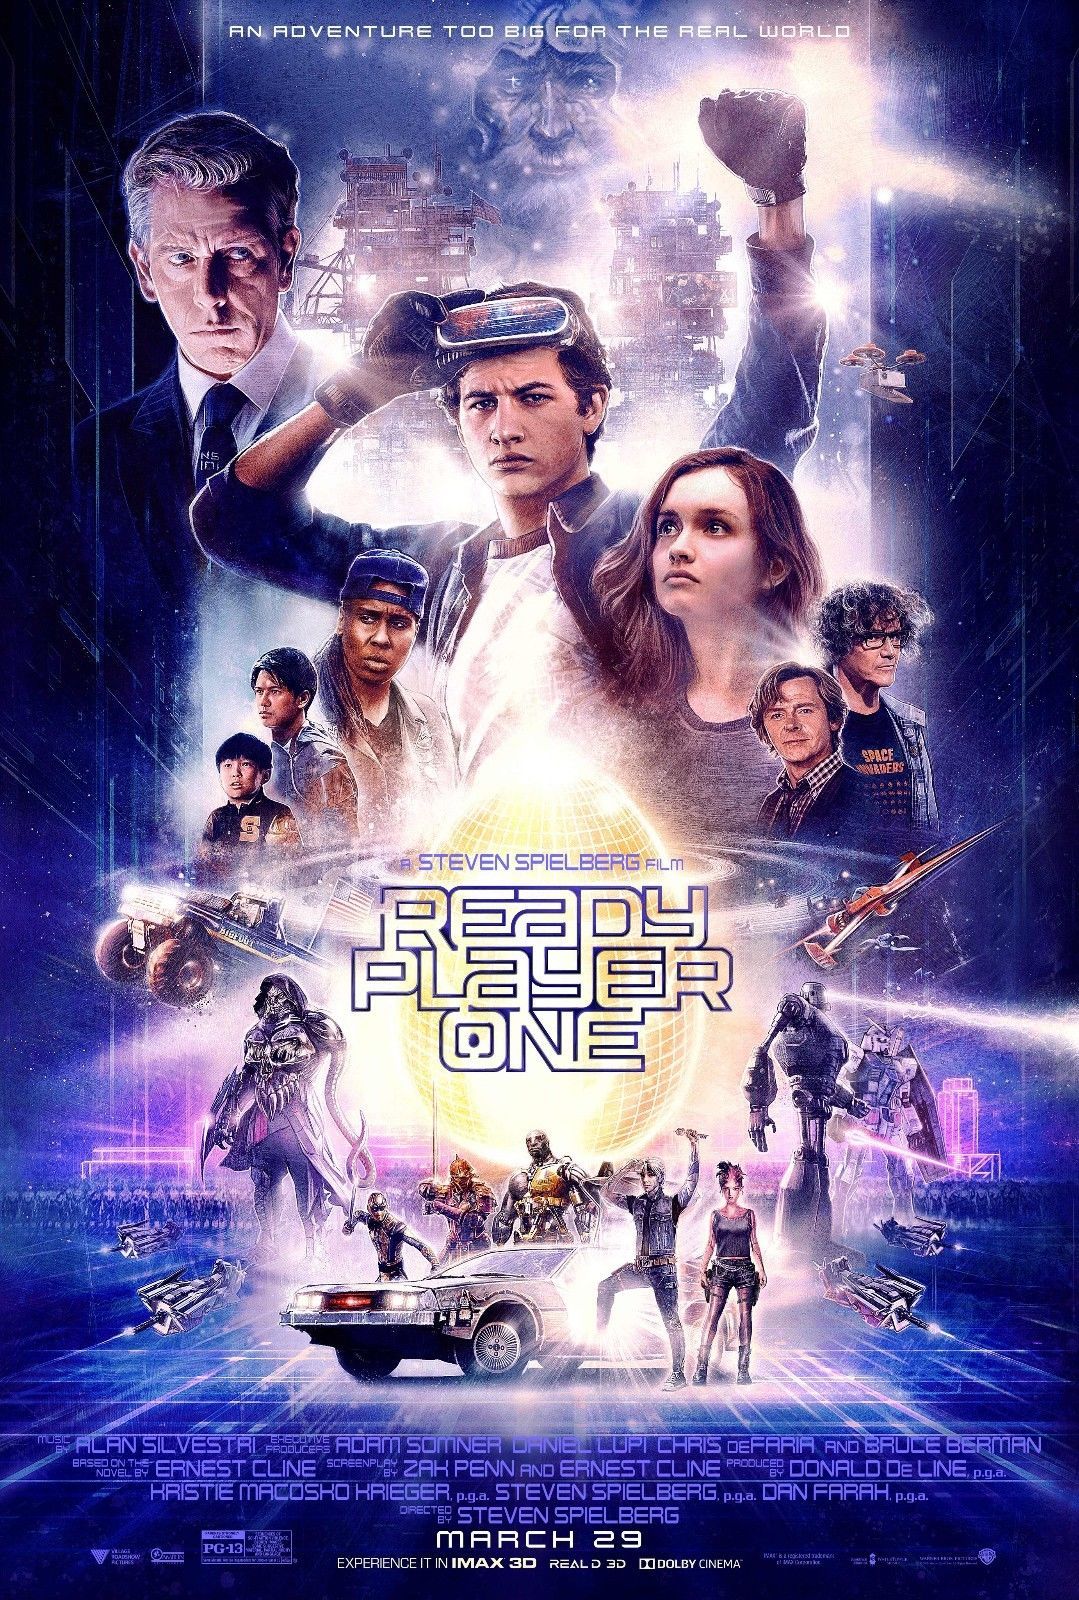 Ready Player One Movie Poster 2018 Steven Spielberg Film 14x21 24x36 27x40 32x48